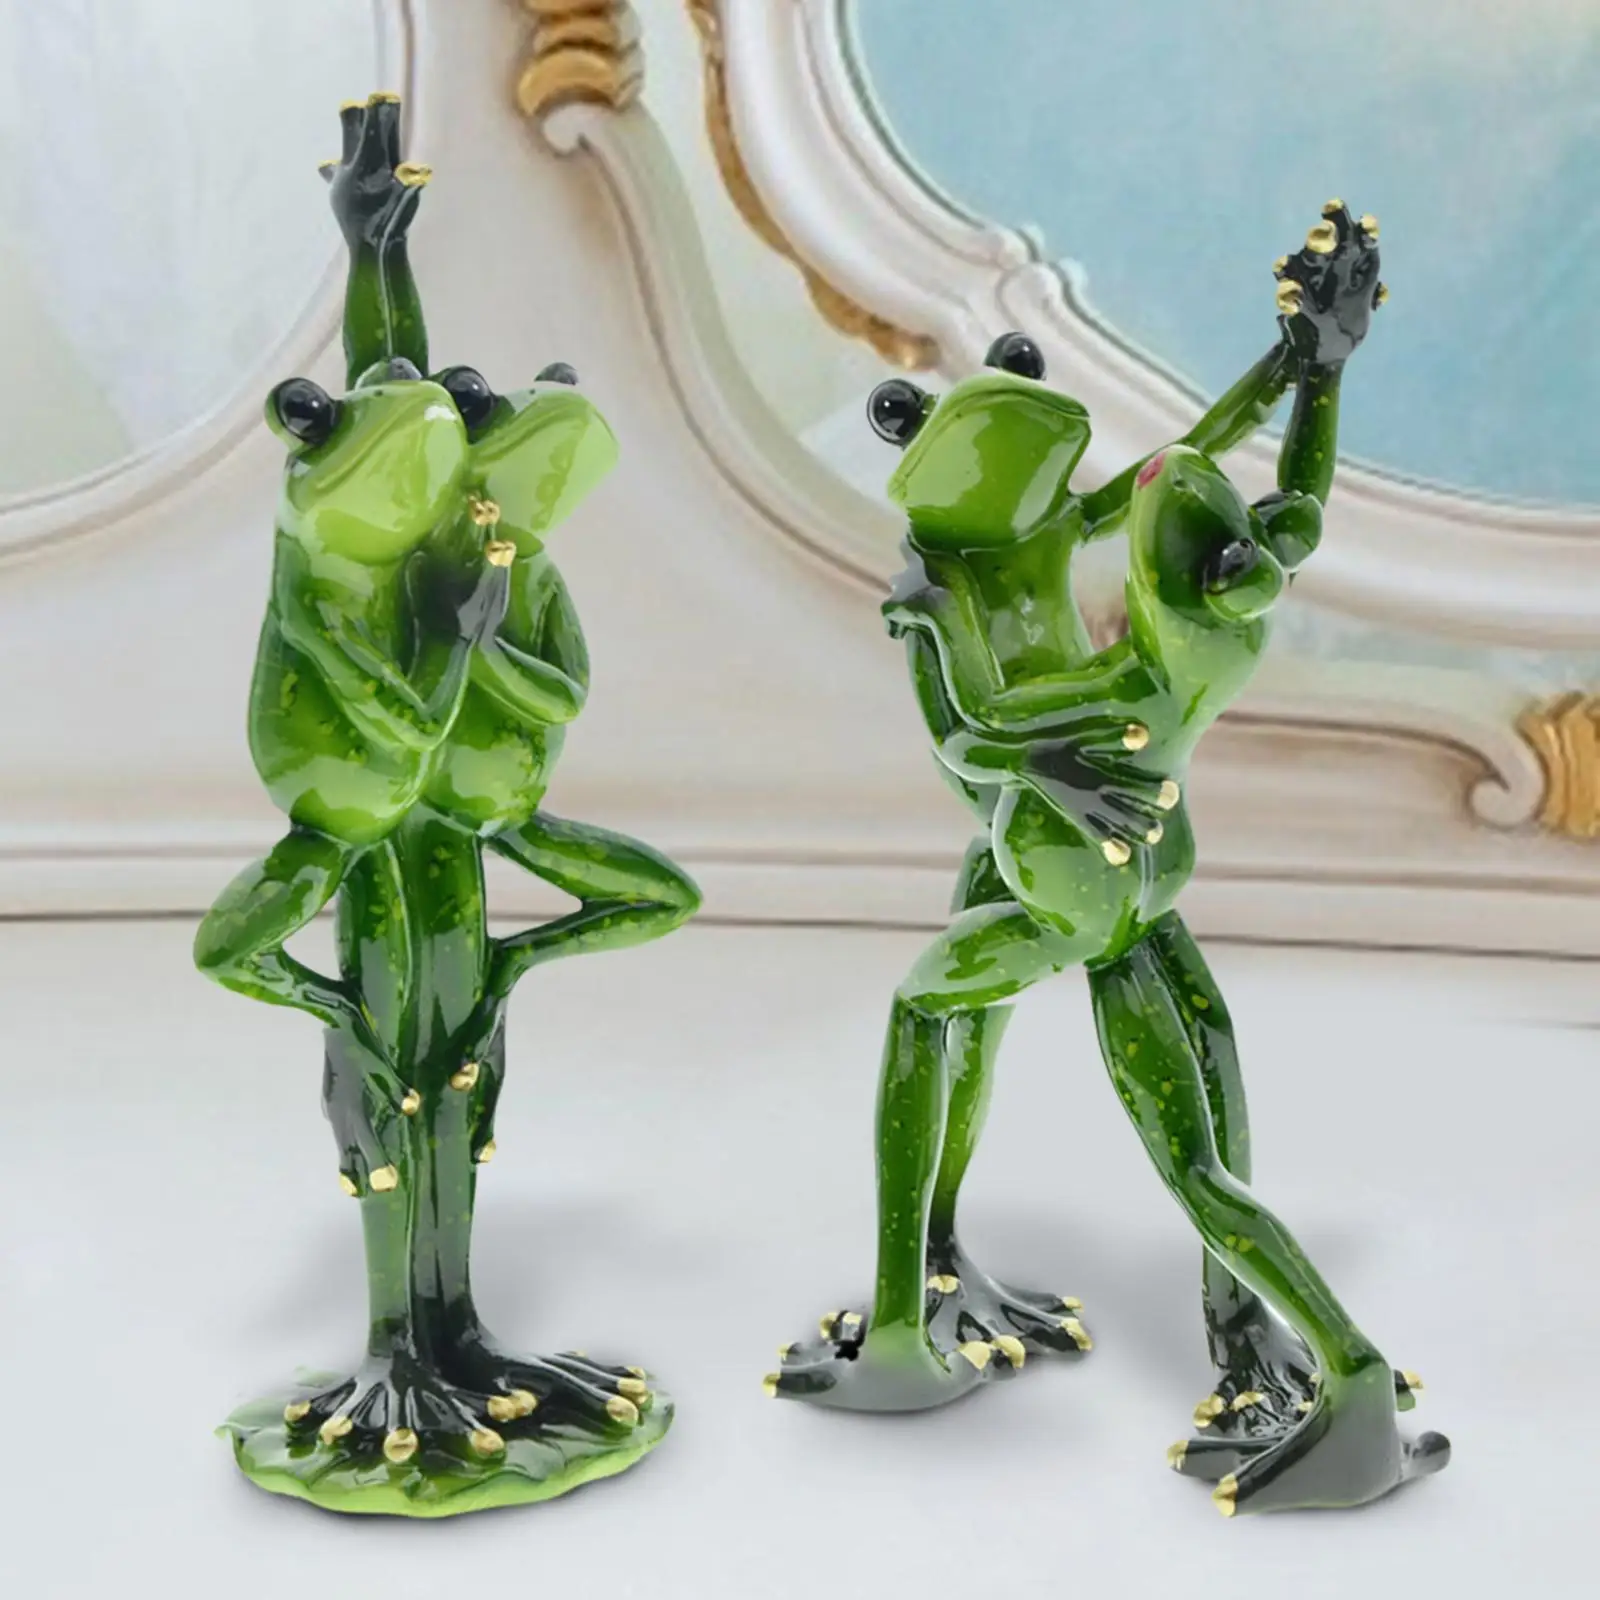 Couple Dancing Frogs Figurine Frog Dancer Sculpture for Entrance Table Decor